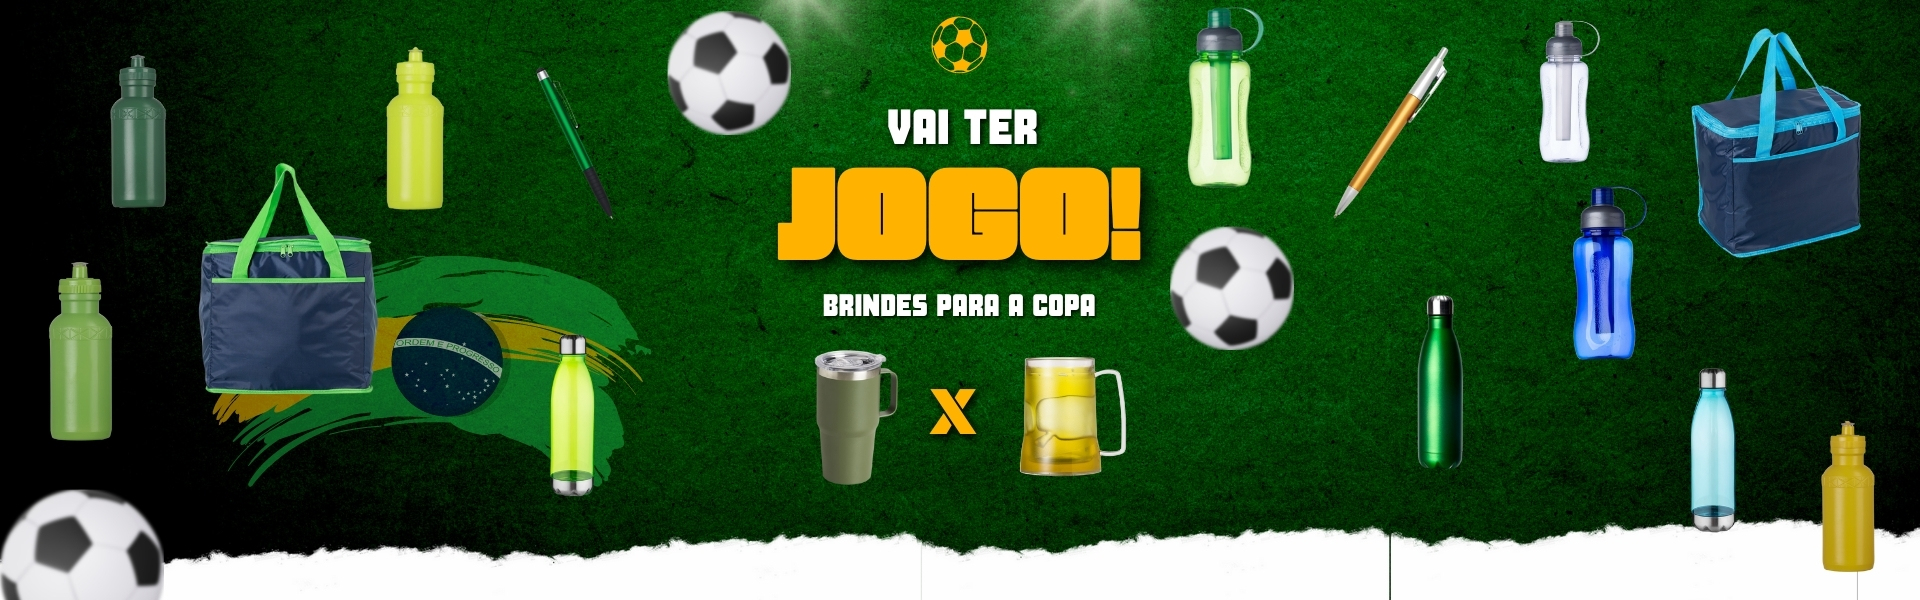 Banner Copa